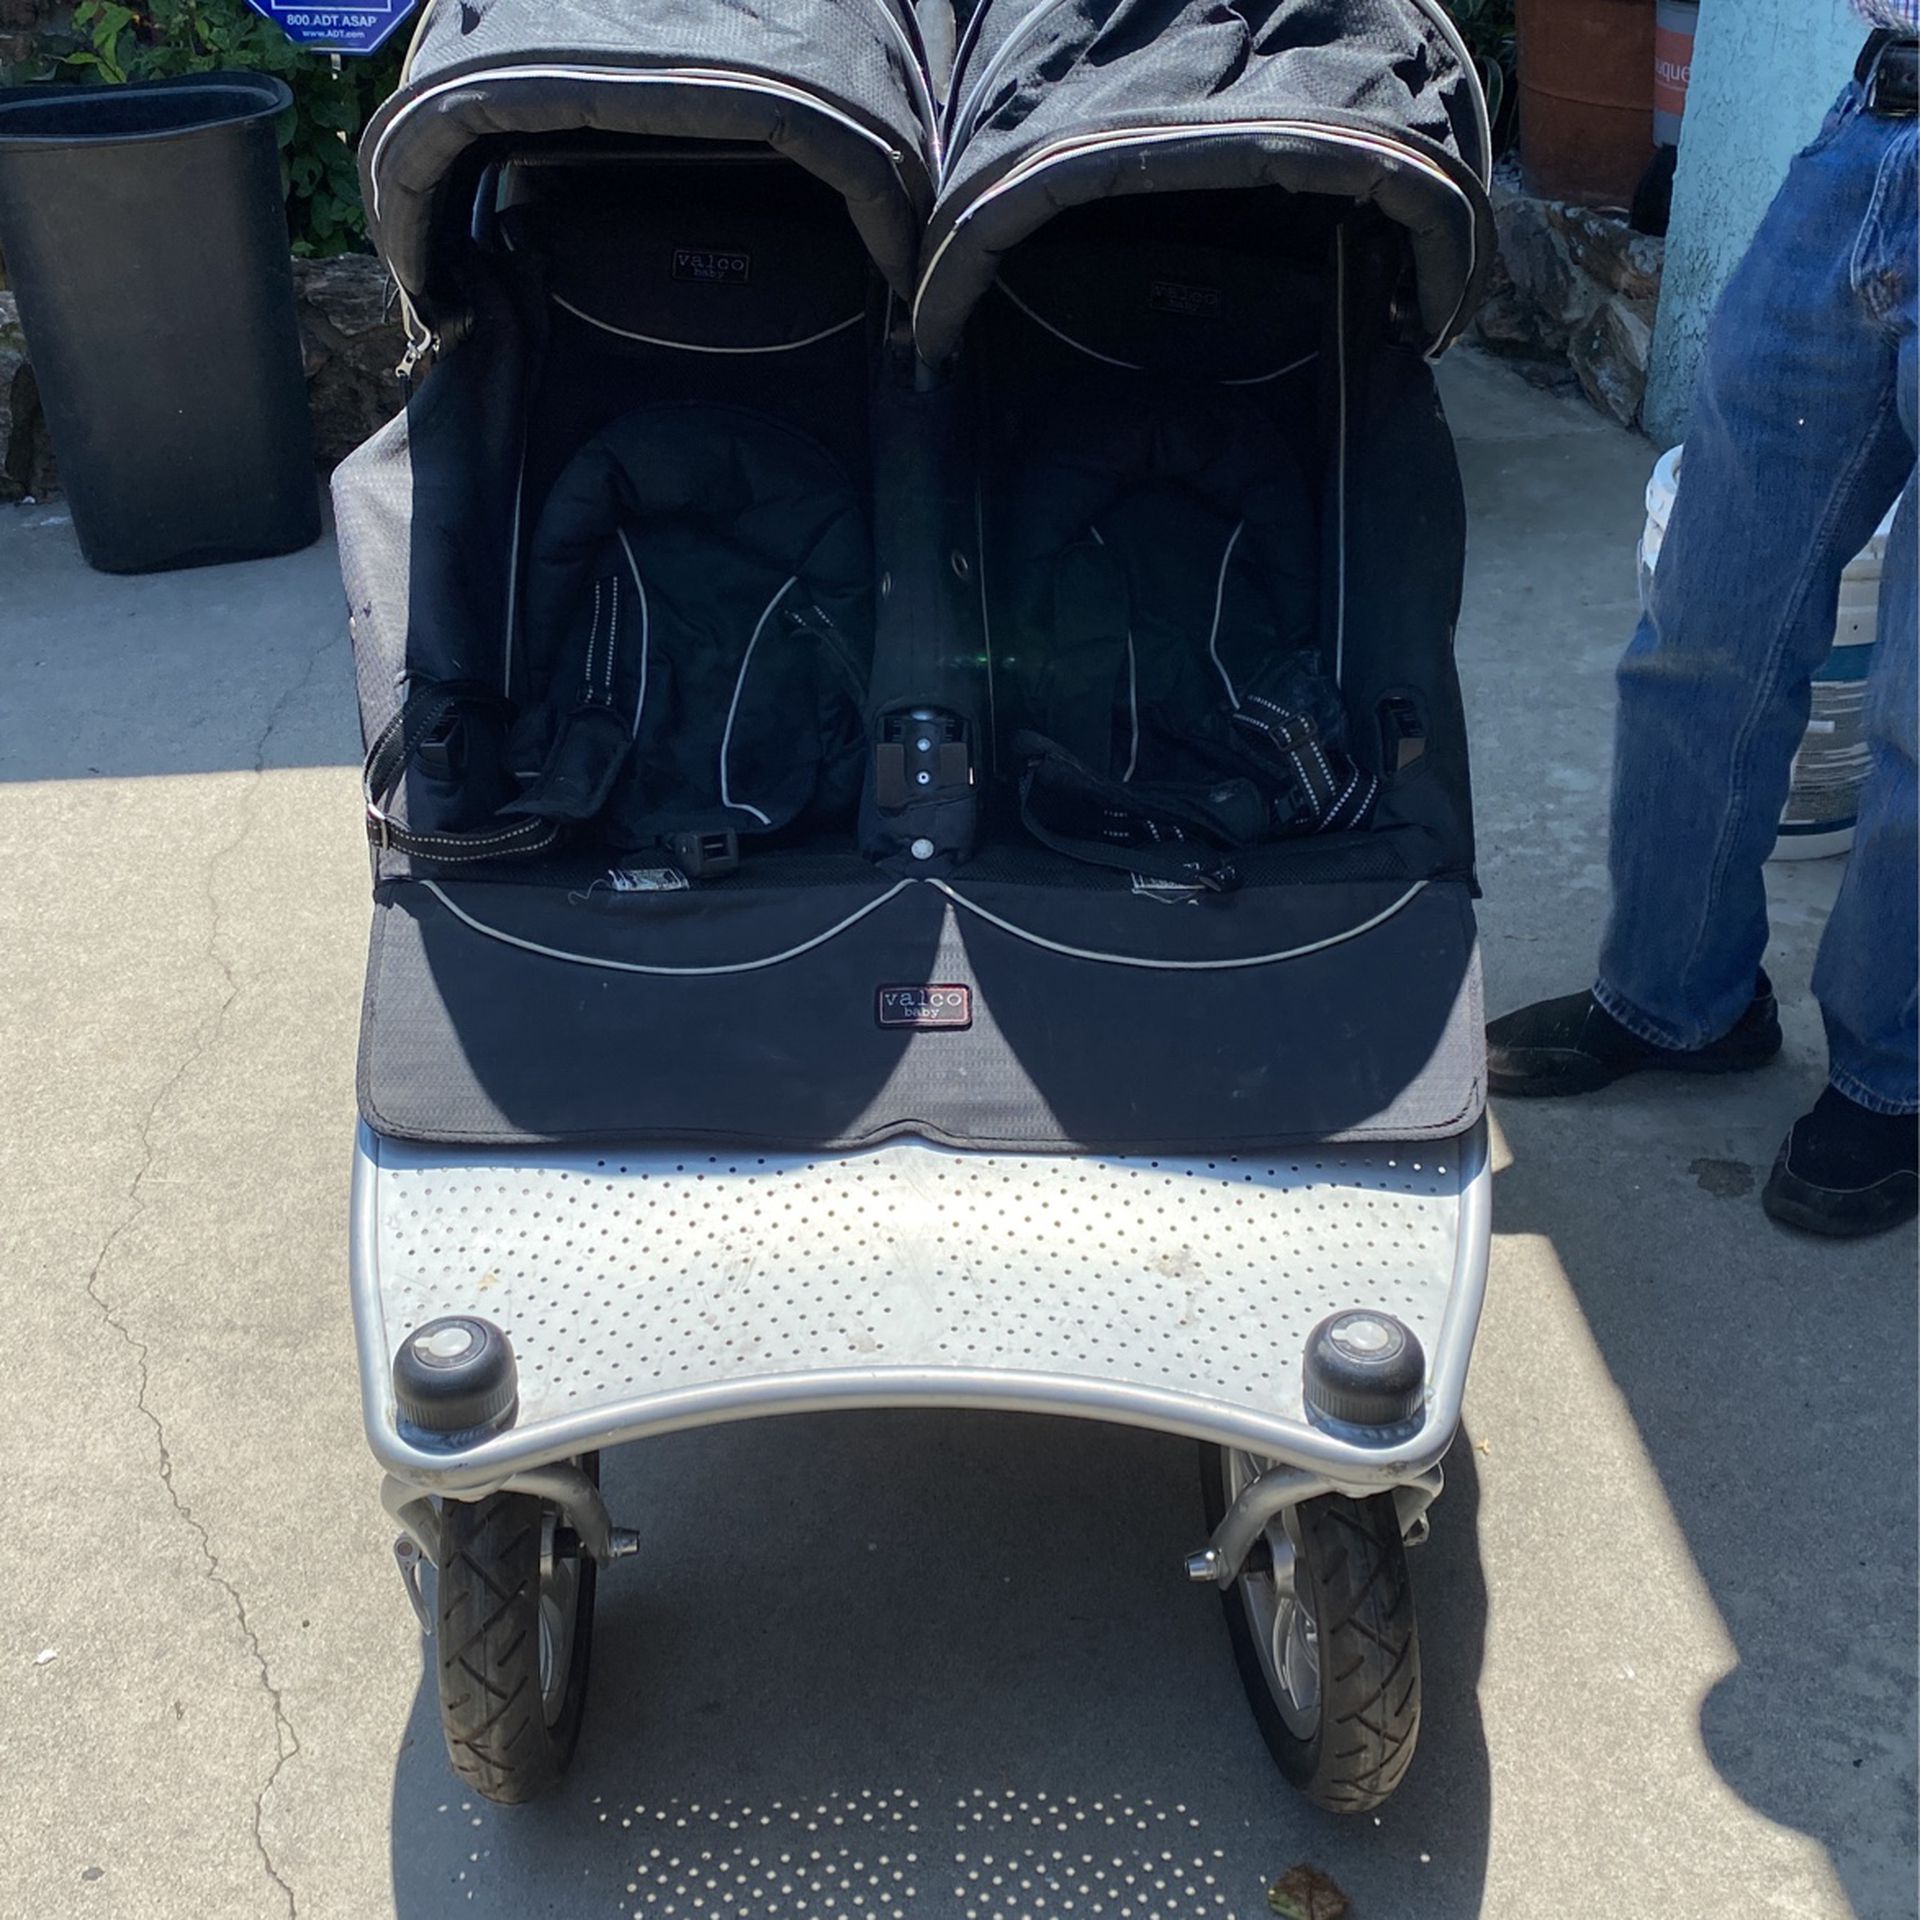 Valco Baby Stroller 